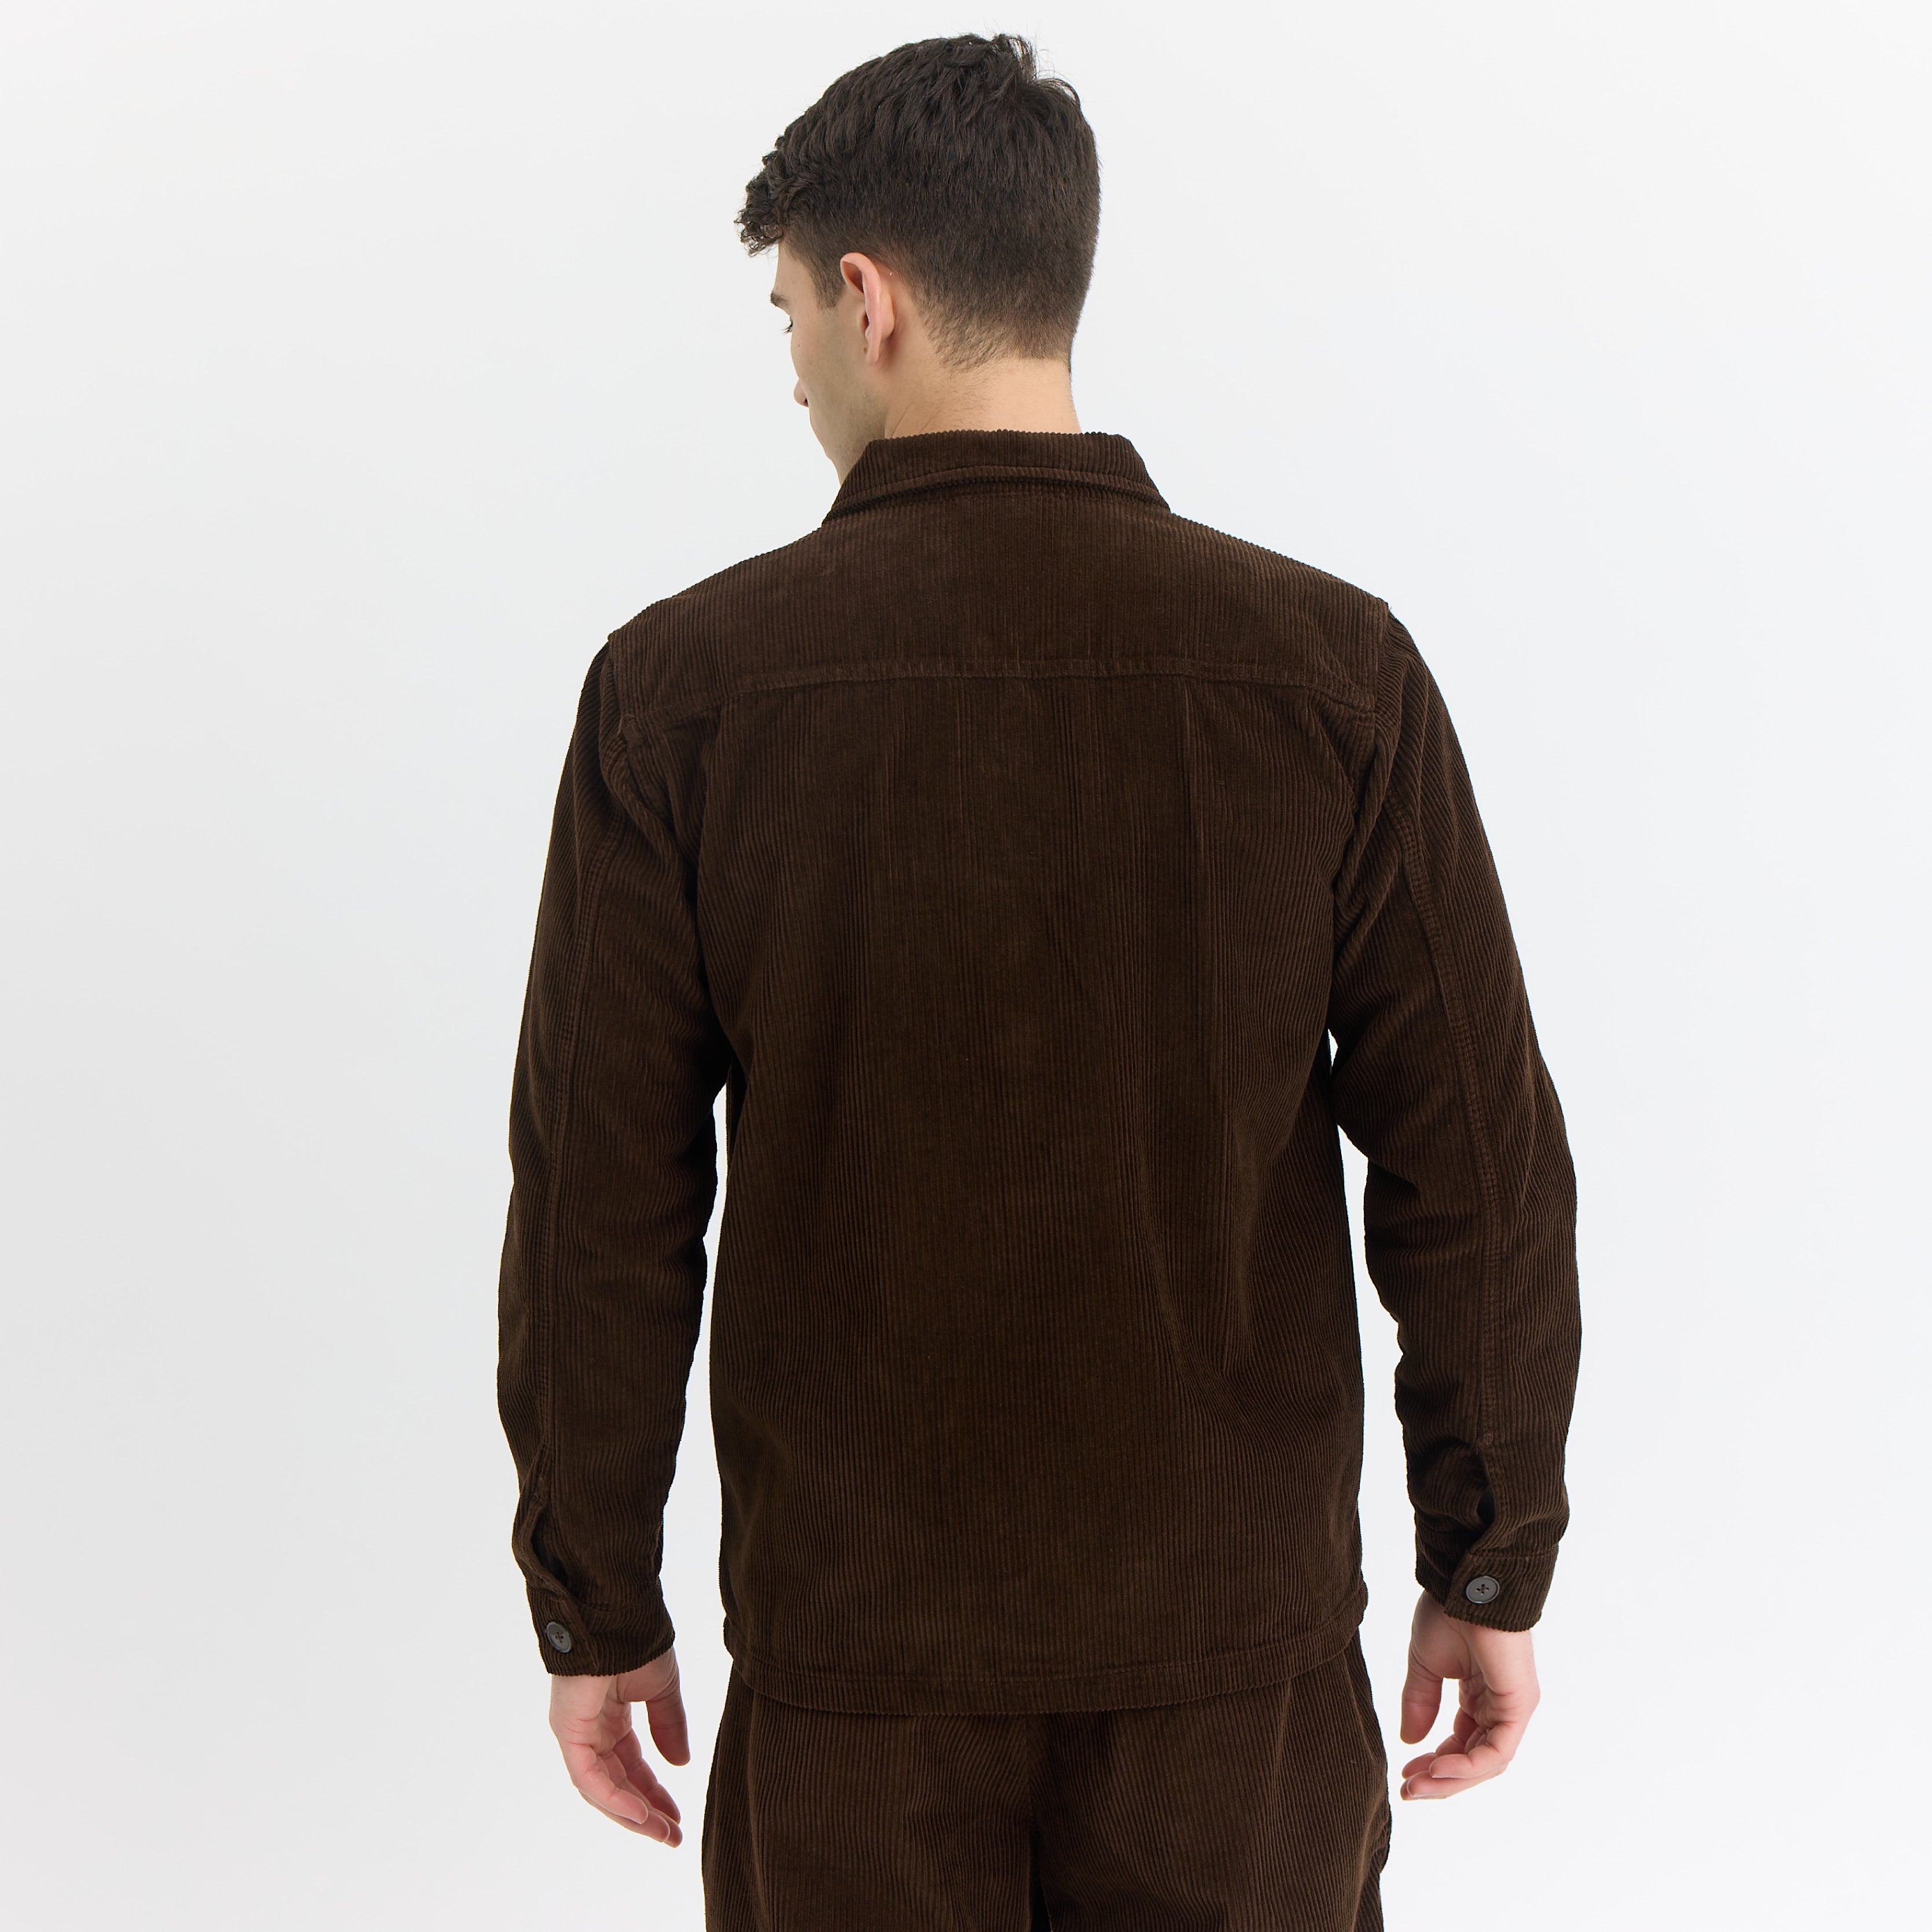 By Garment Makers Matt Corduroy Jacket GOTS Jacket 3000 Ebony Brown